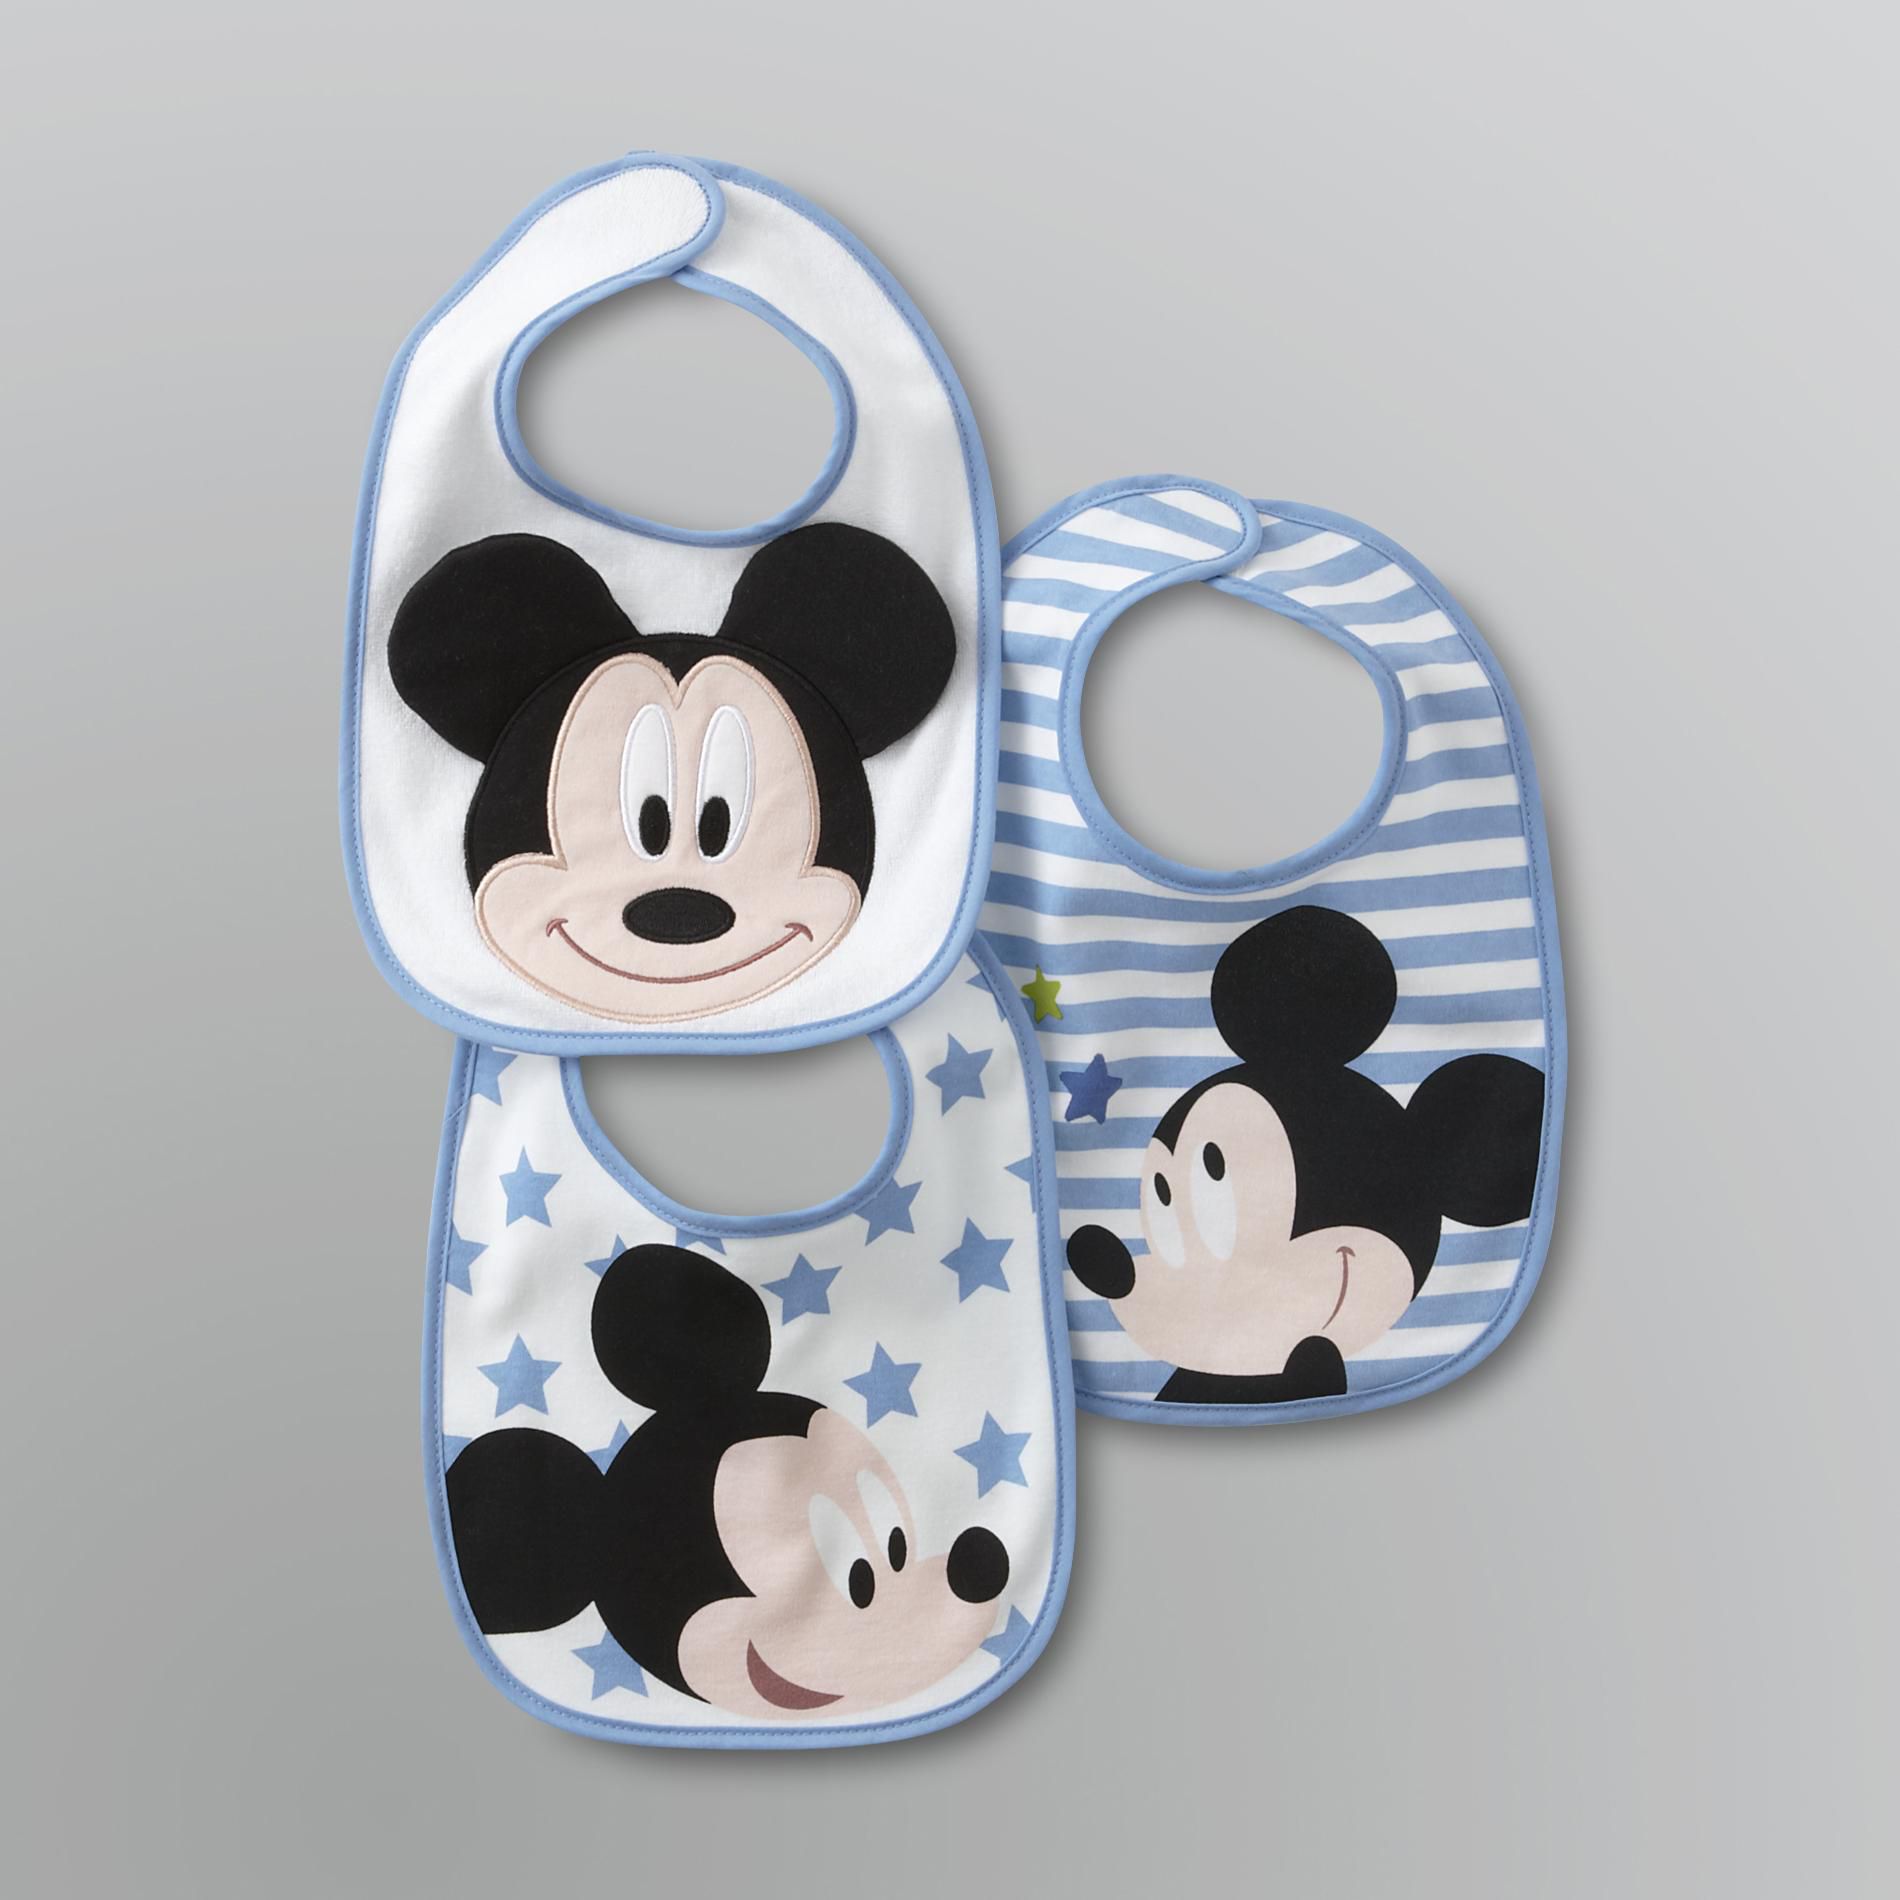 Disney Newborn Boy's Mickey Mouse Bibs - 3 Pack